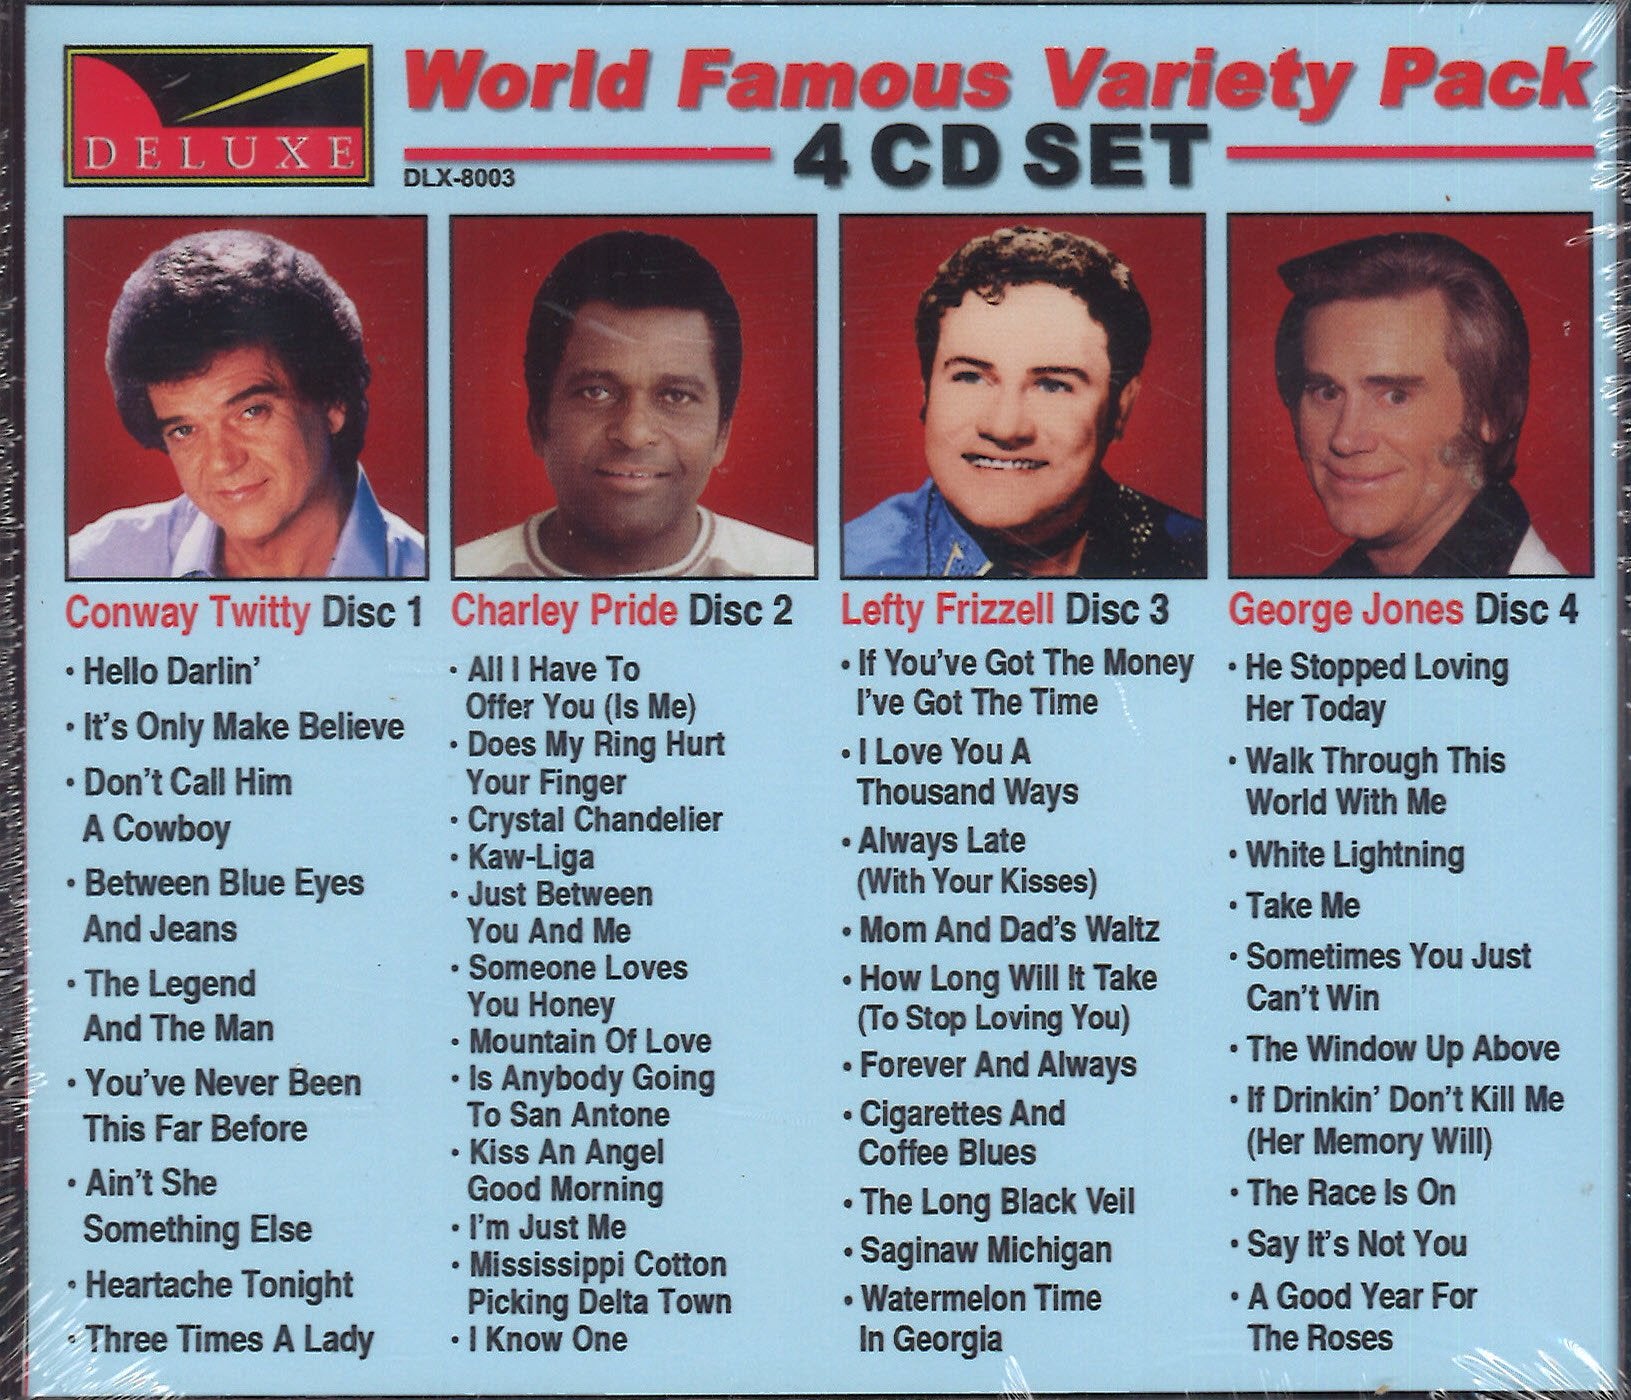 World Famous Variety Pack 8003: 4 CD Set